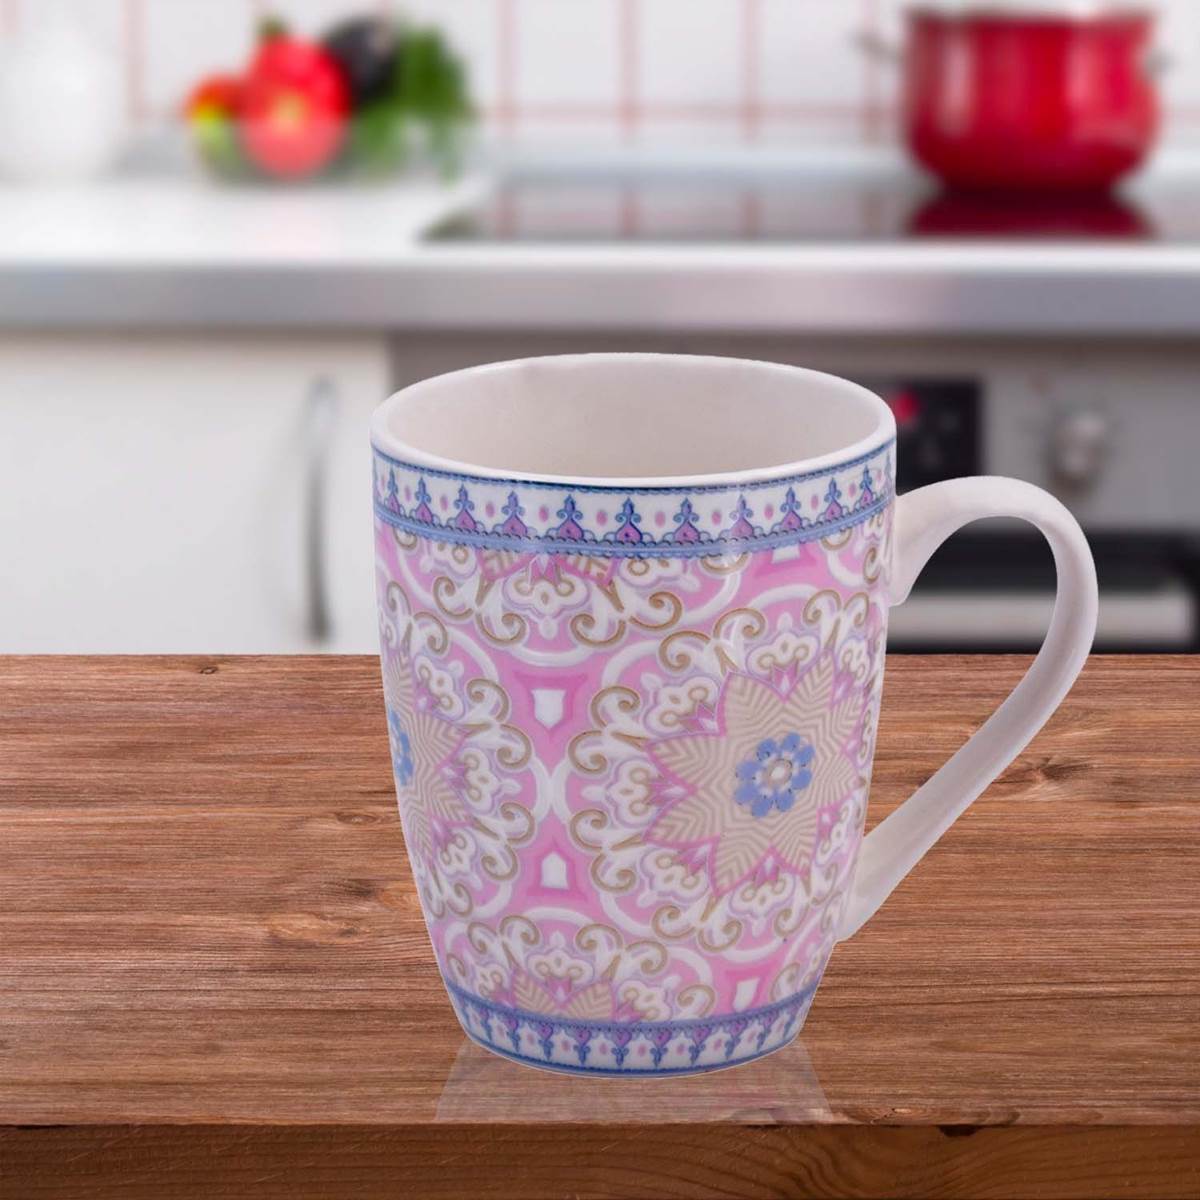 Printed Ceramic Coffee or Tea Mug with handle - 325ml (4134G-C)